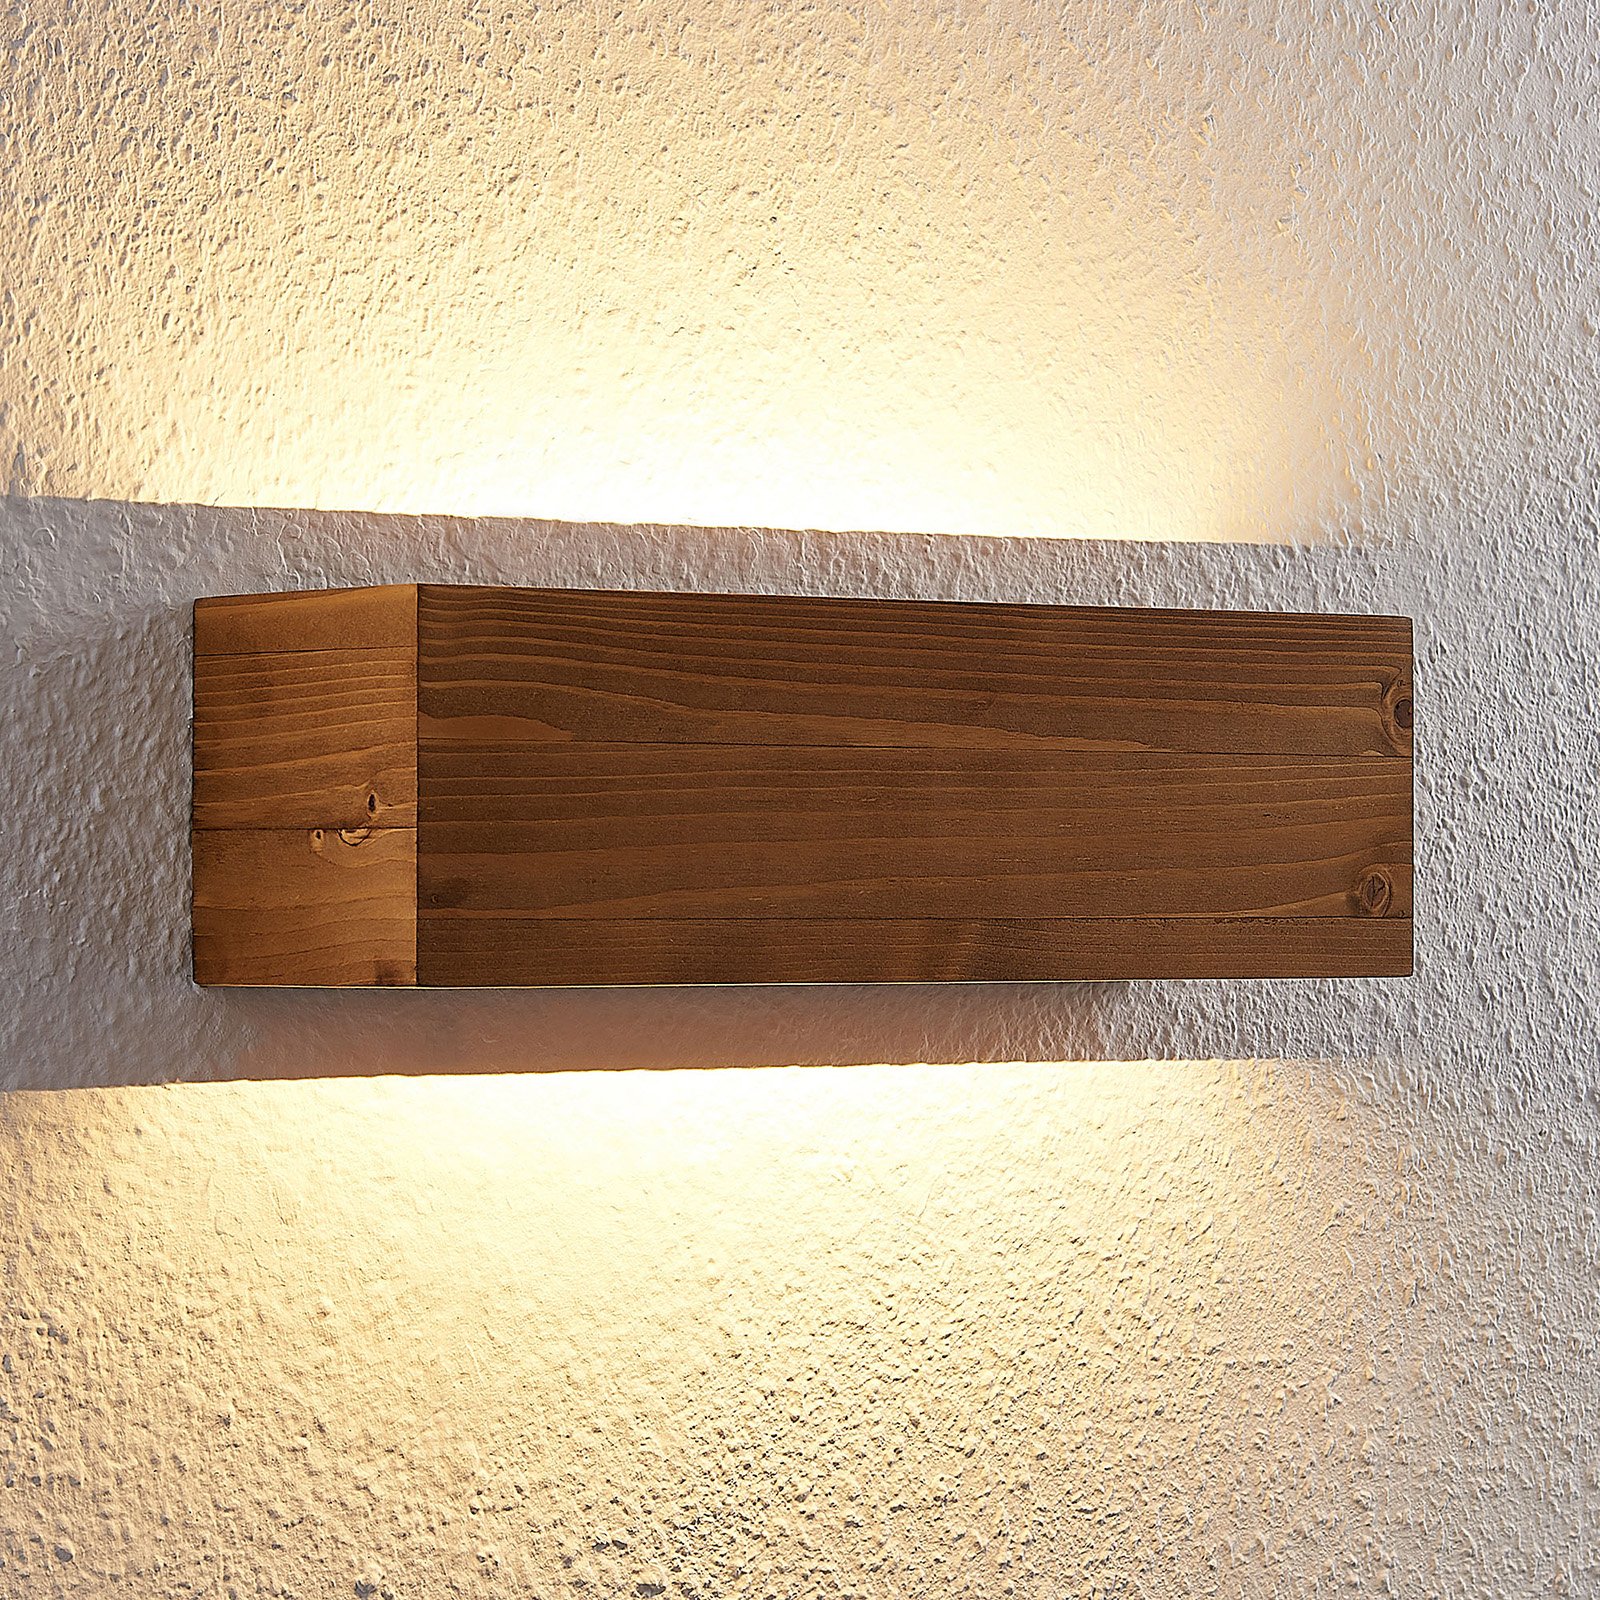 Lindby Benicio houten LED wandlamp, hoekig, 37 cm